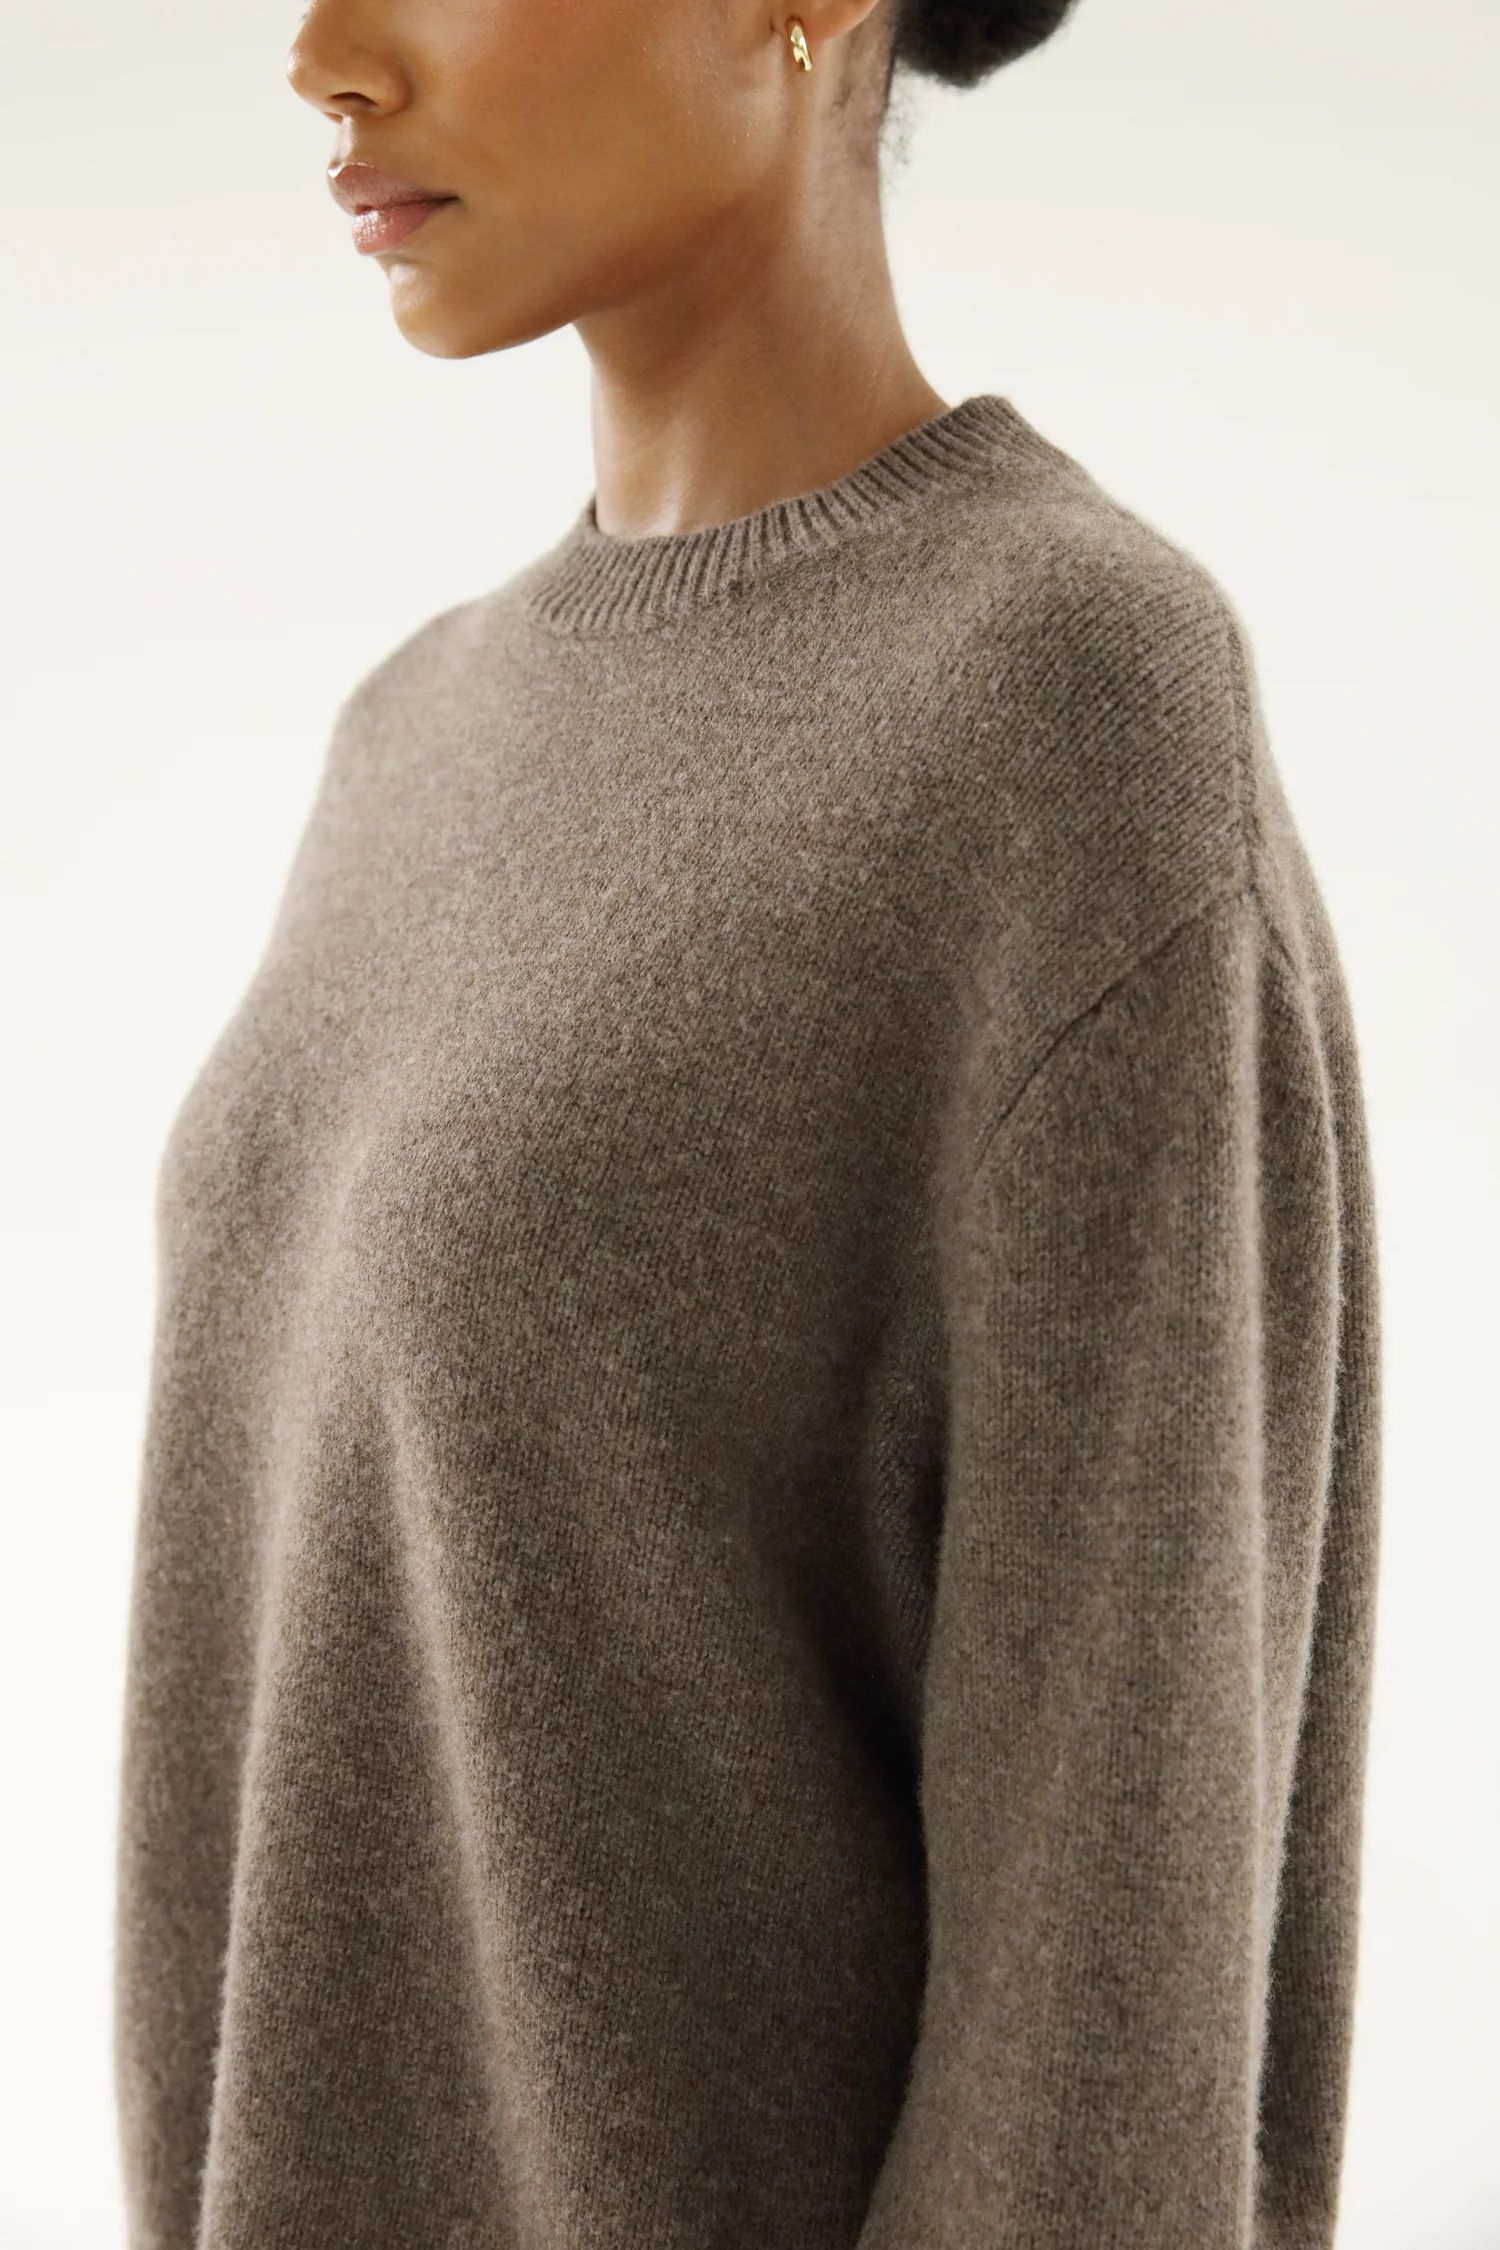 Flo Crewneck Sweater, mocha | Almada Label